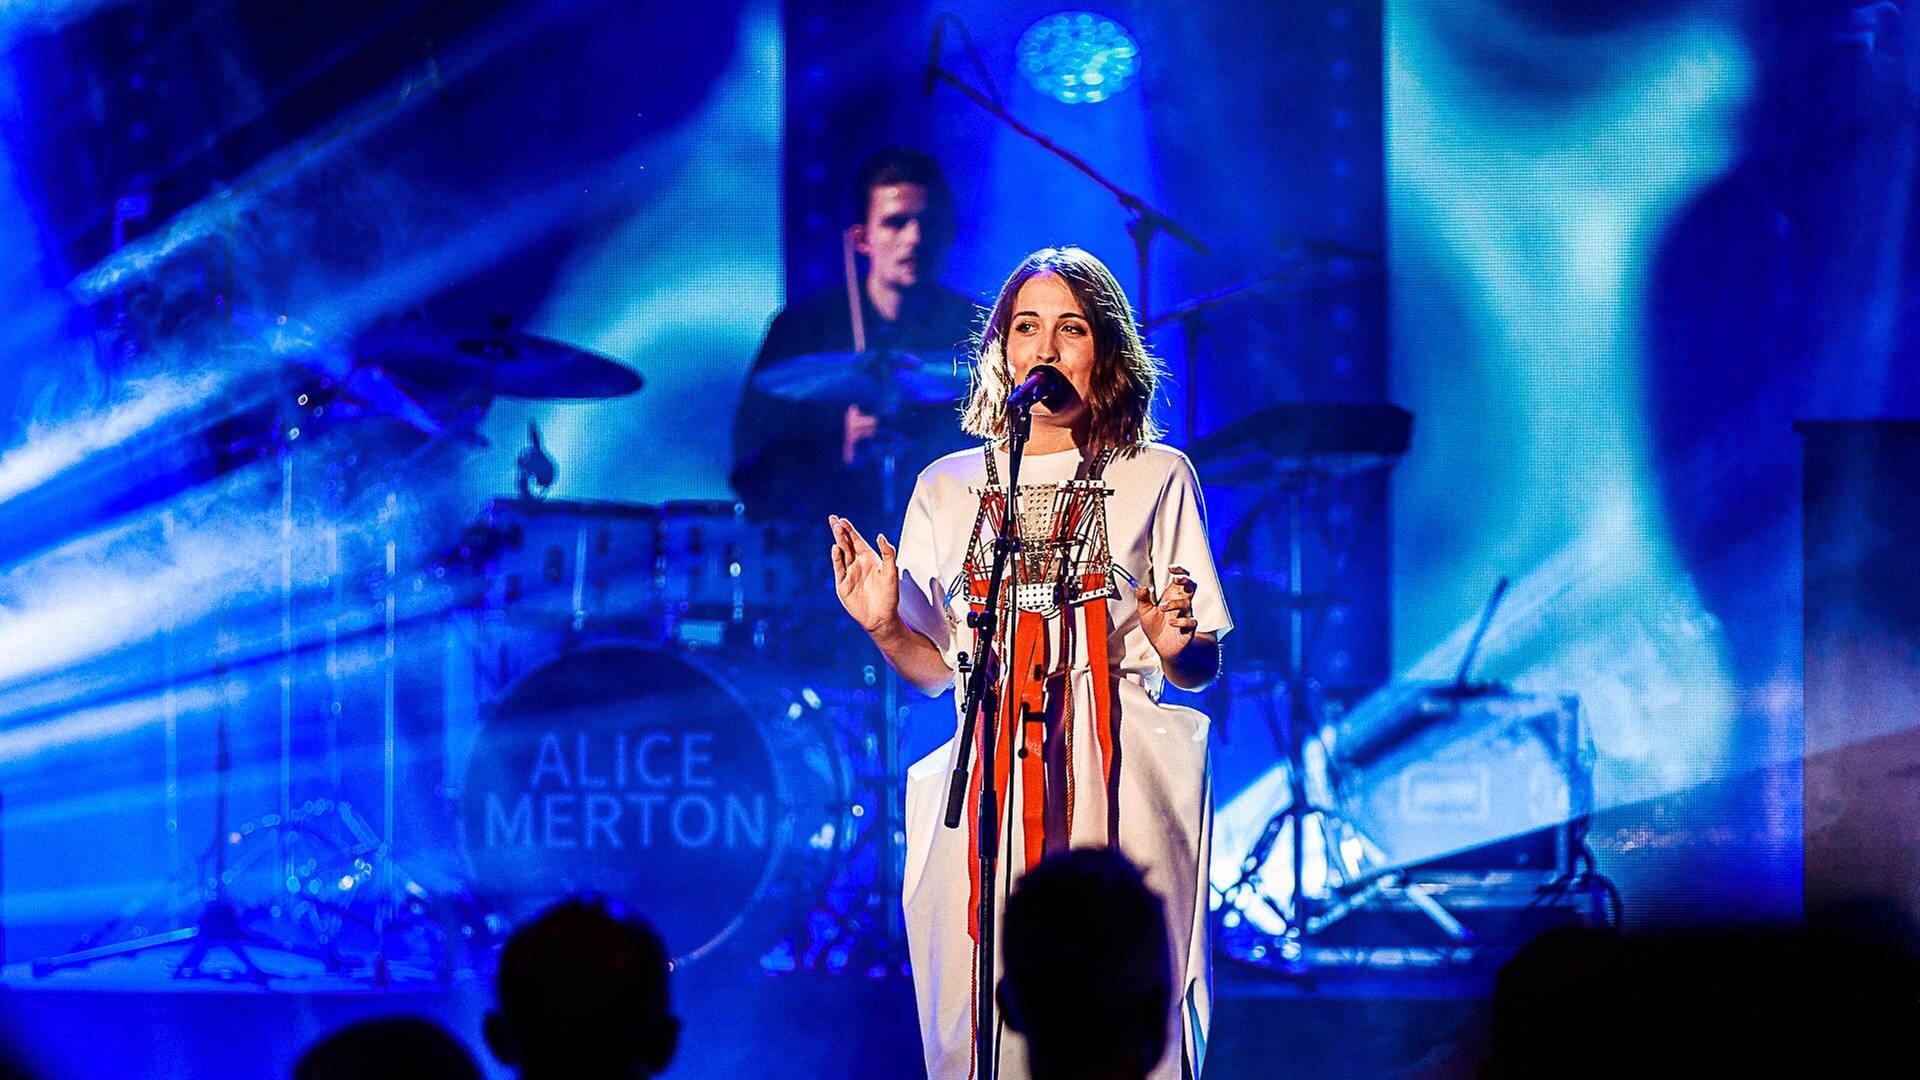 Alice Merton beim  SWR3 New Pop Festival 2017 (Foto: SWR3)